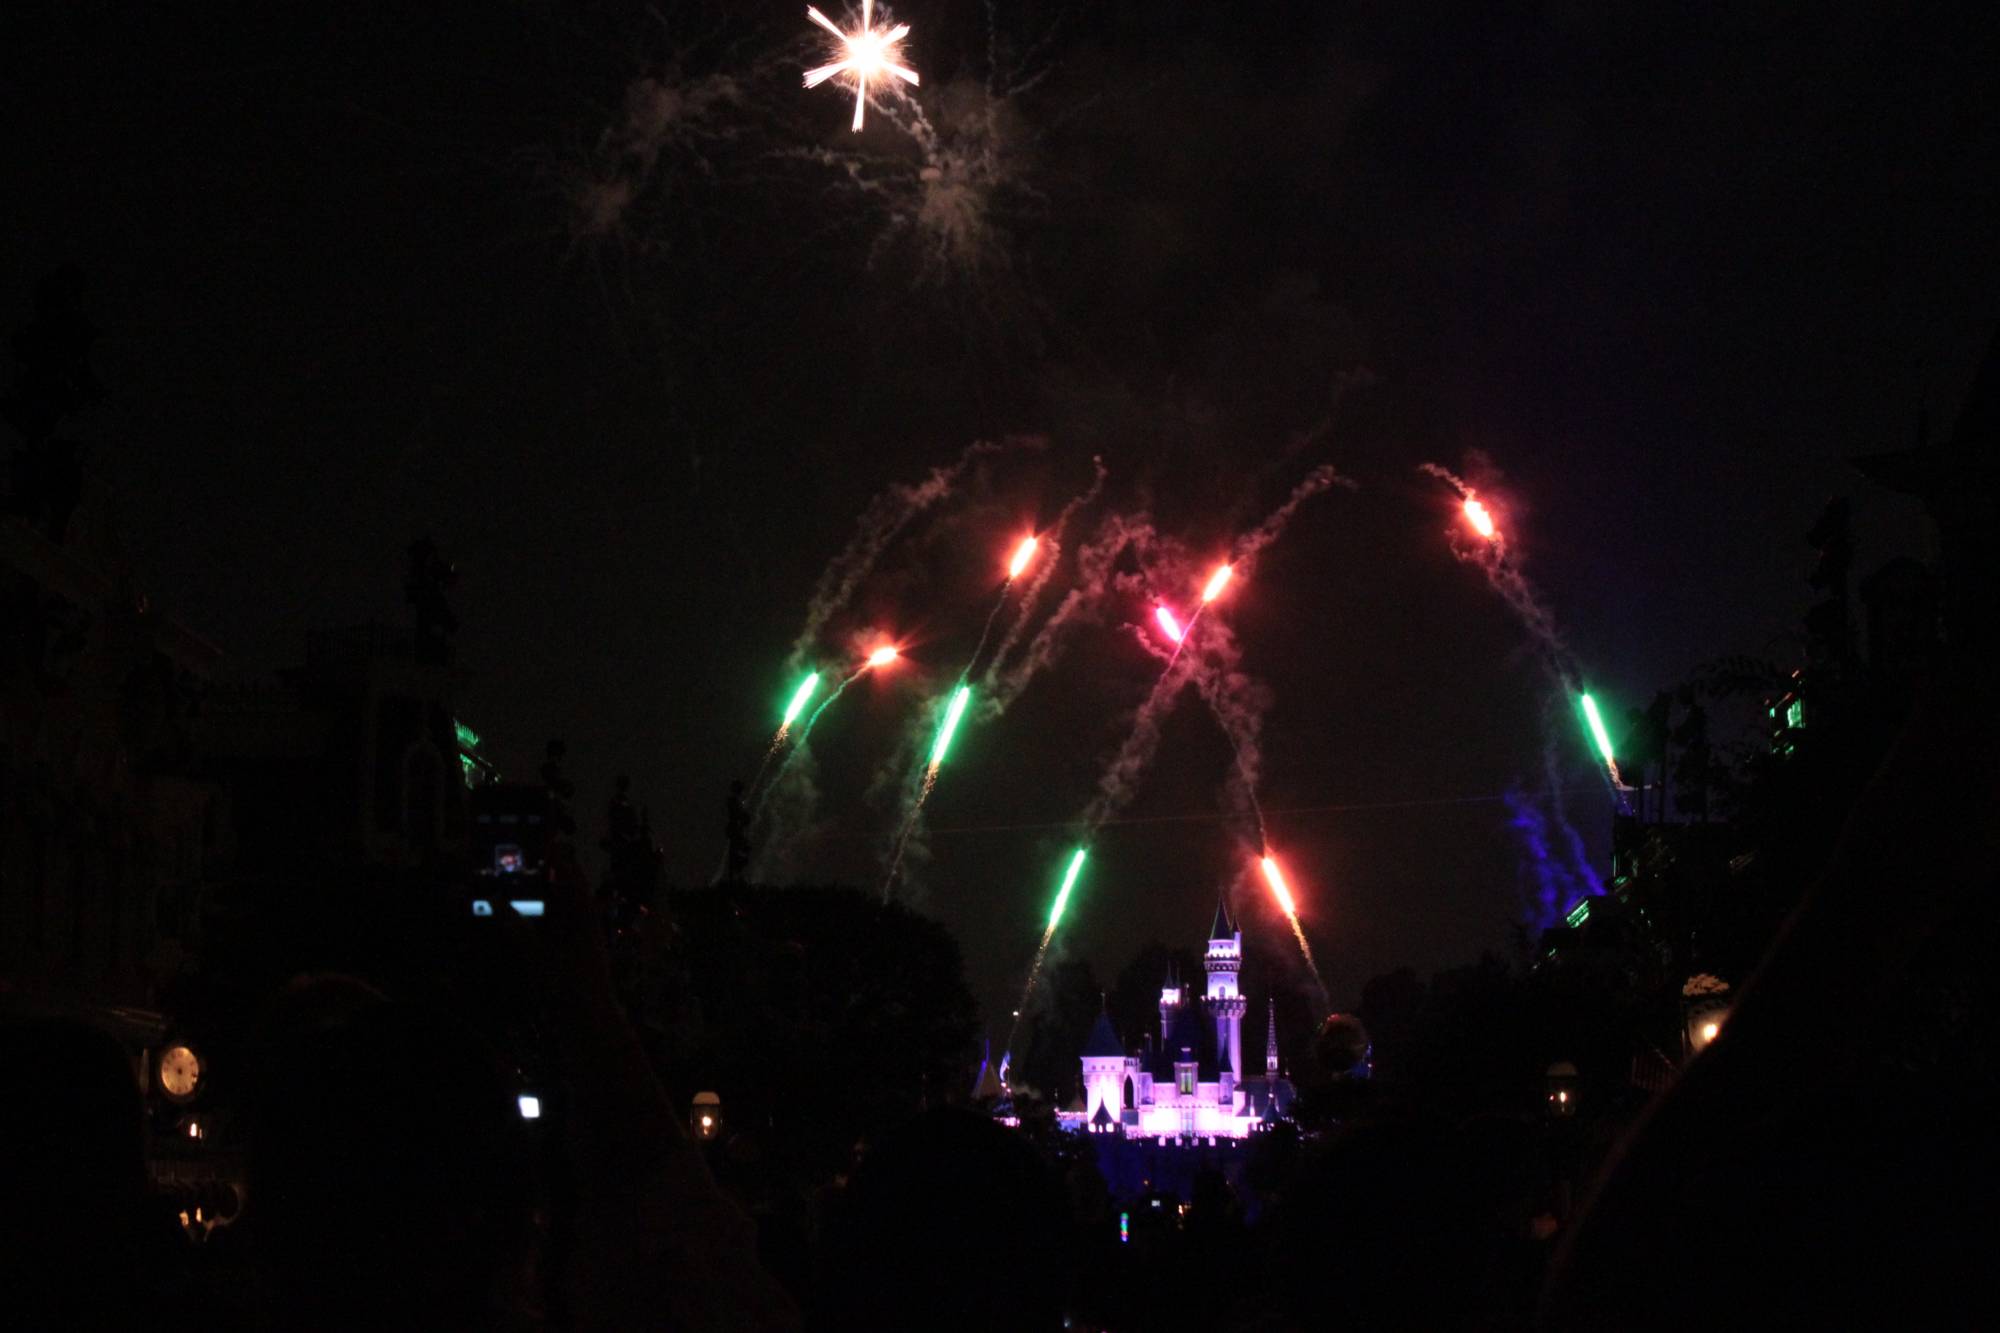 Disneyland - Magical (summer fireworks show)